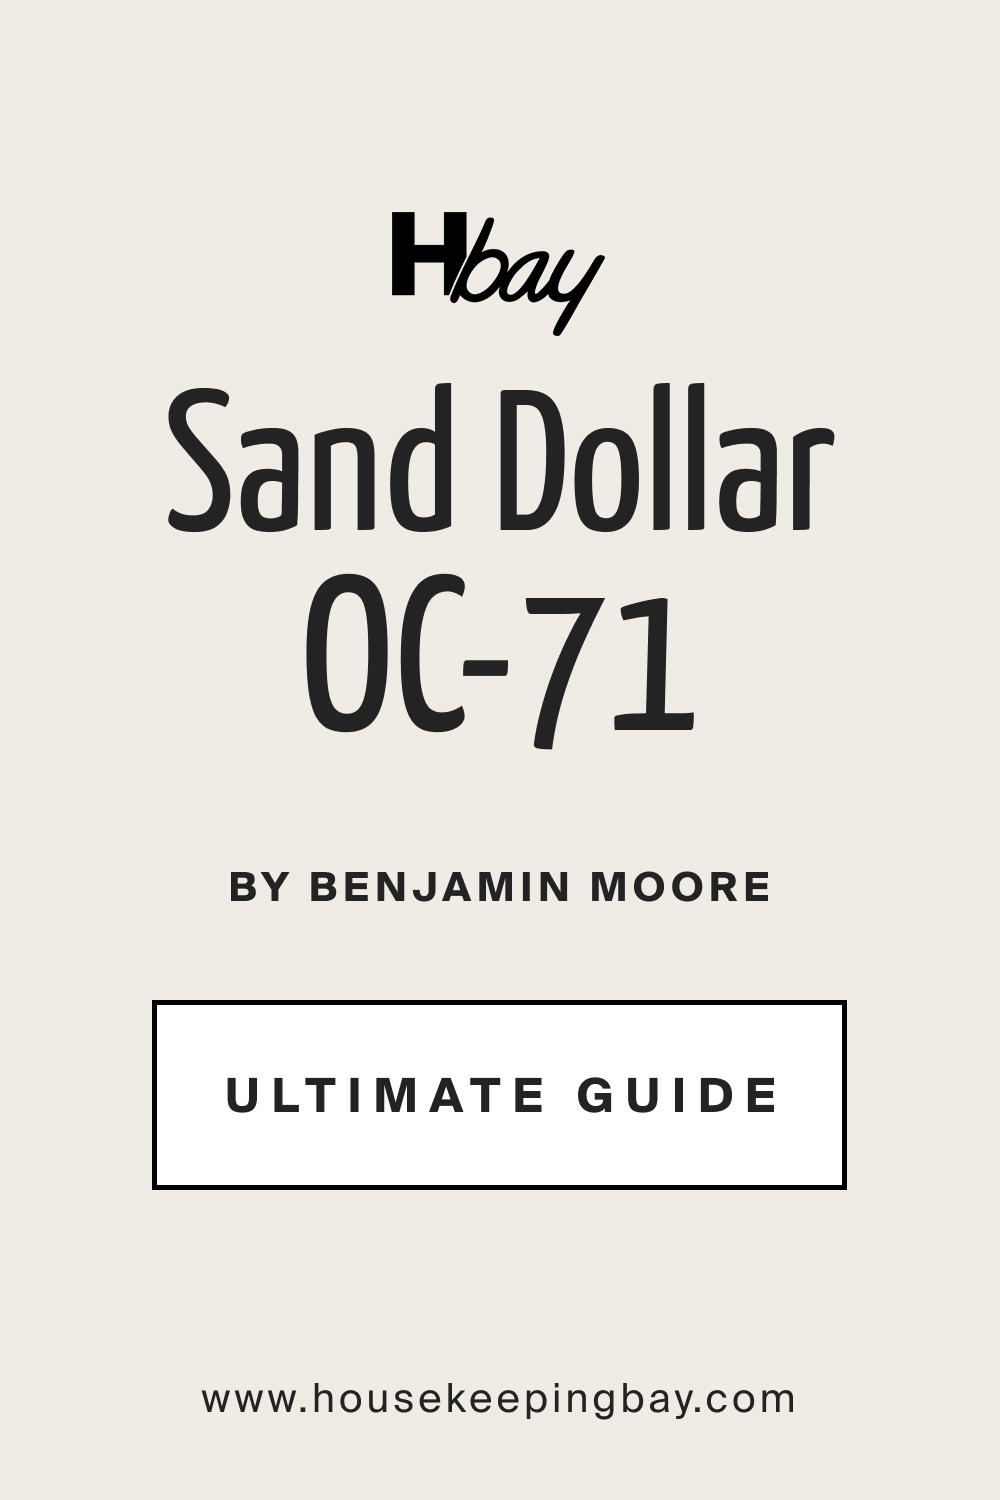 Sand Dollar OC 71 by Benjamin Moore Ultimate Guide